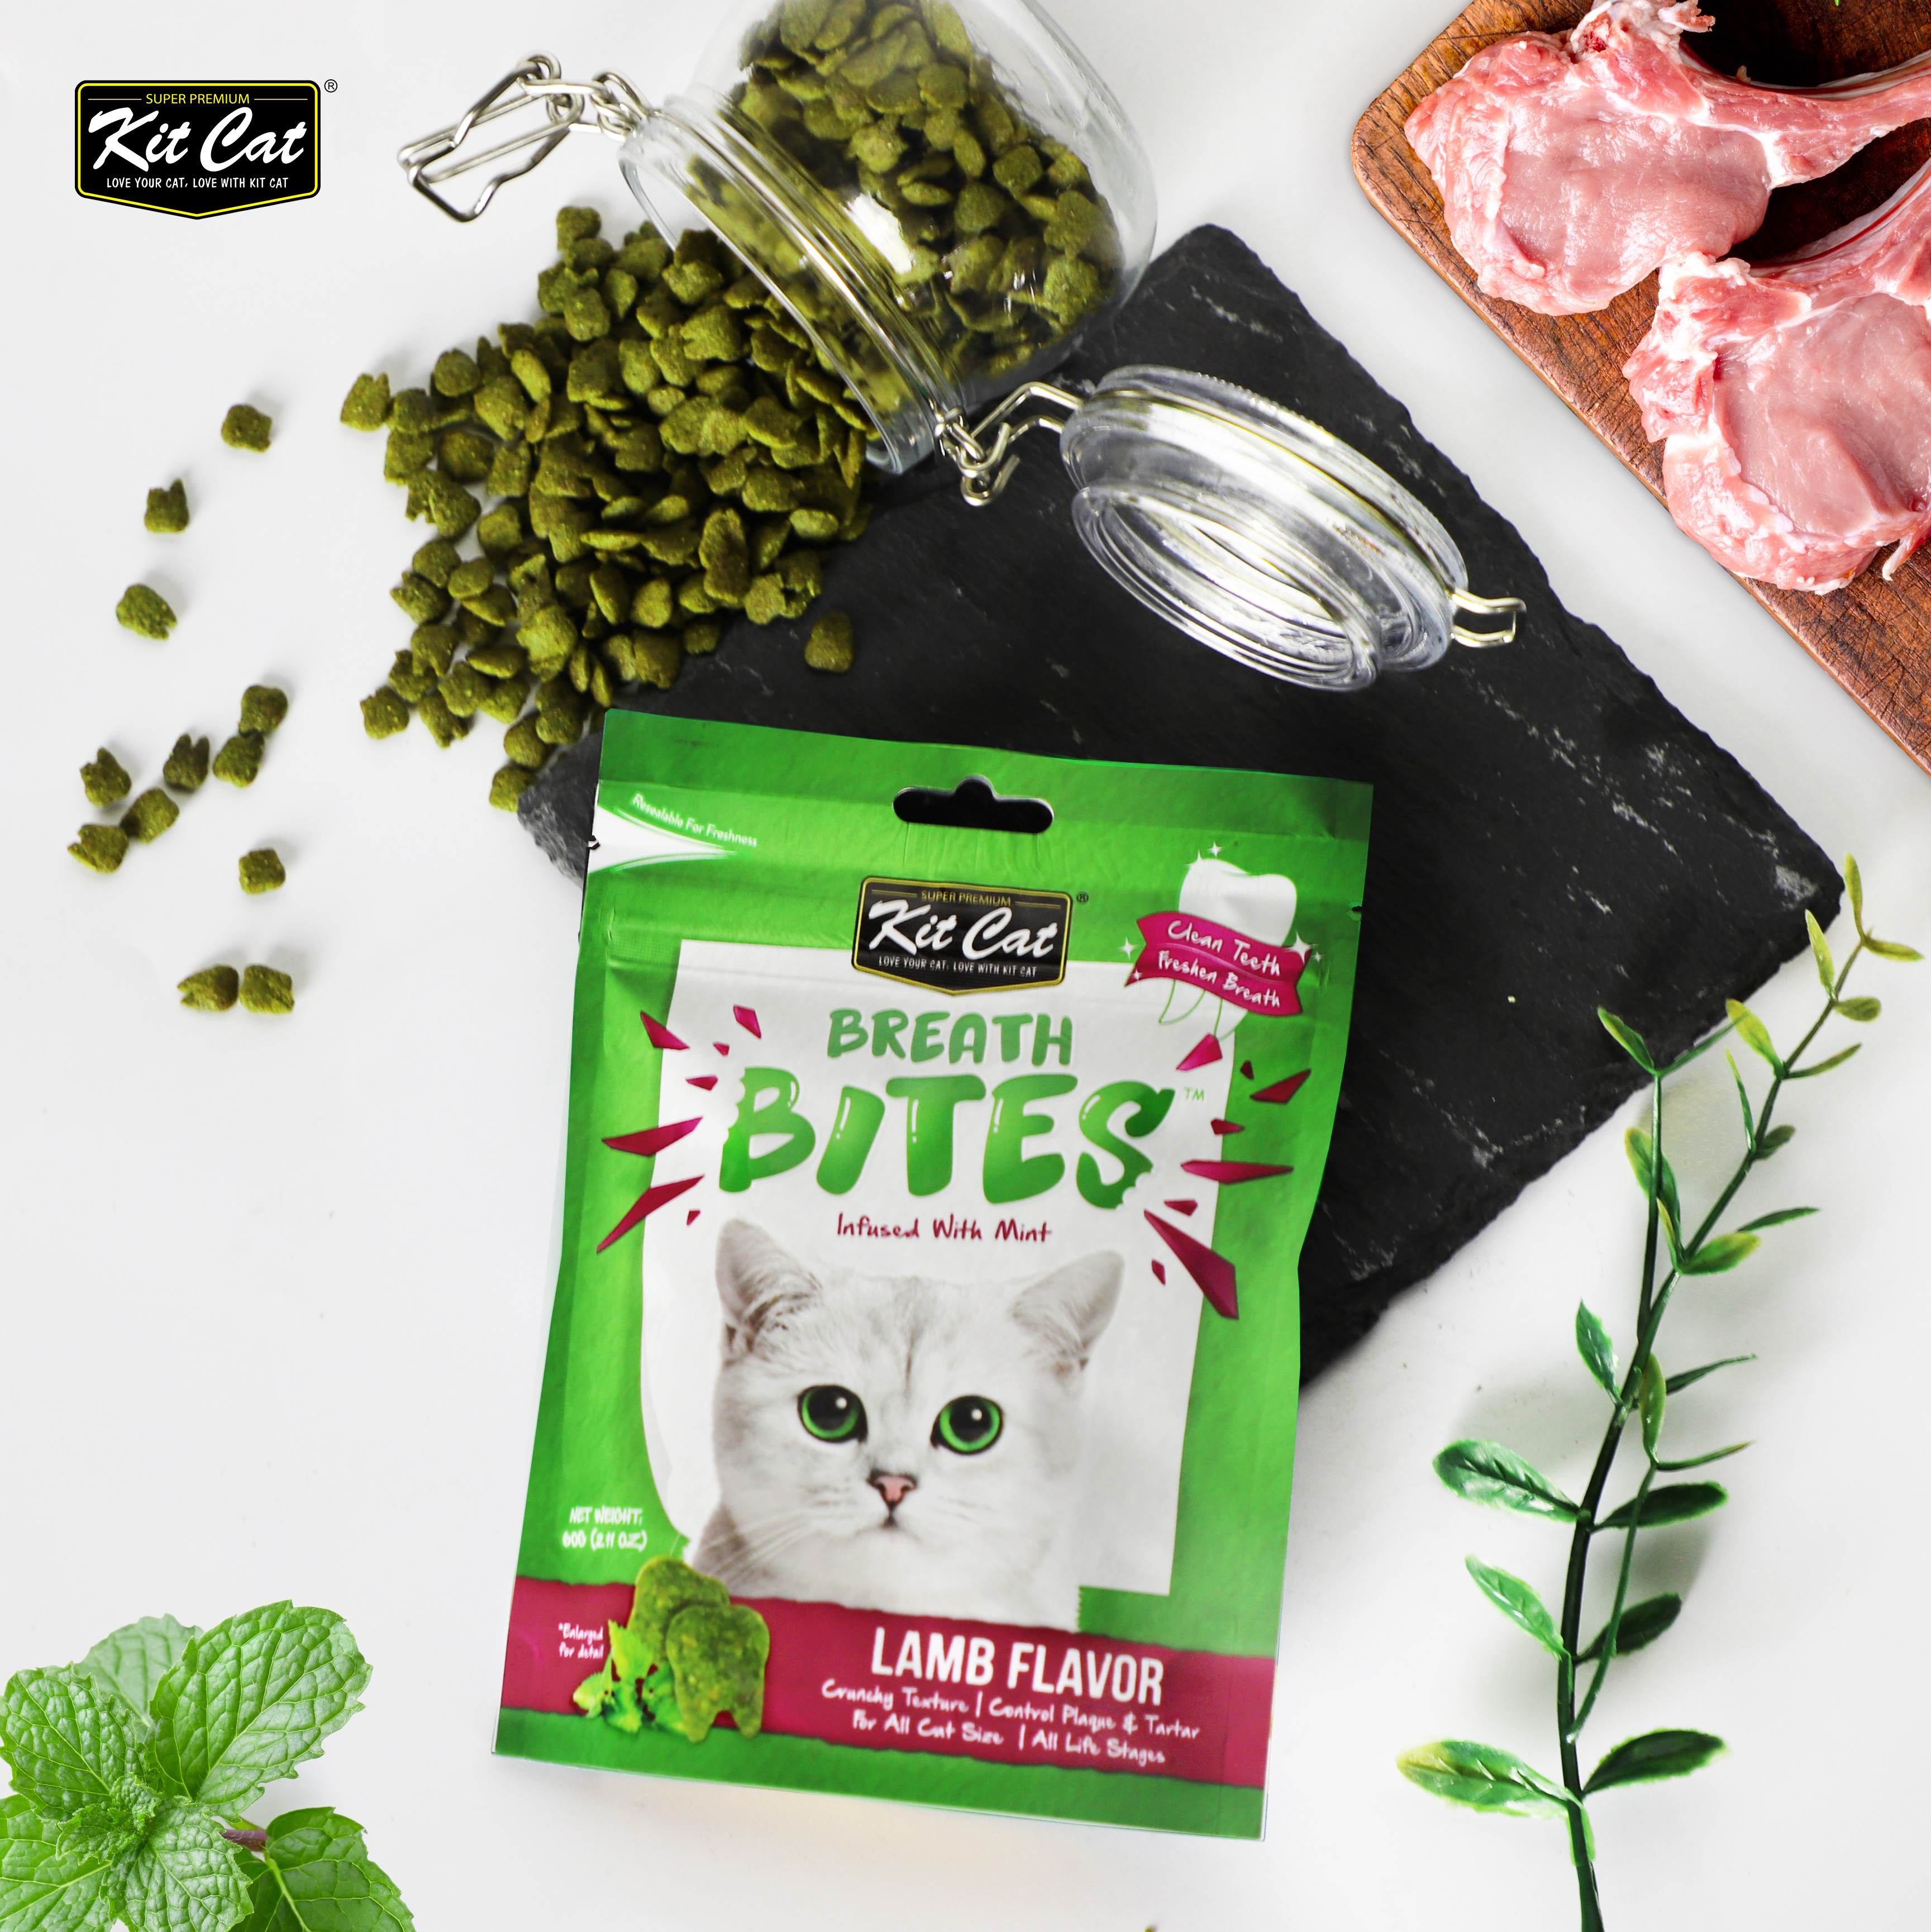 Kit Cat Breath Bites Lamb Flavor 60g Cat Treat